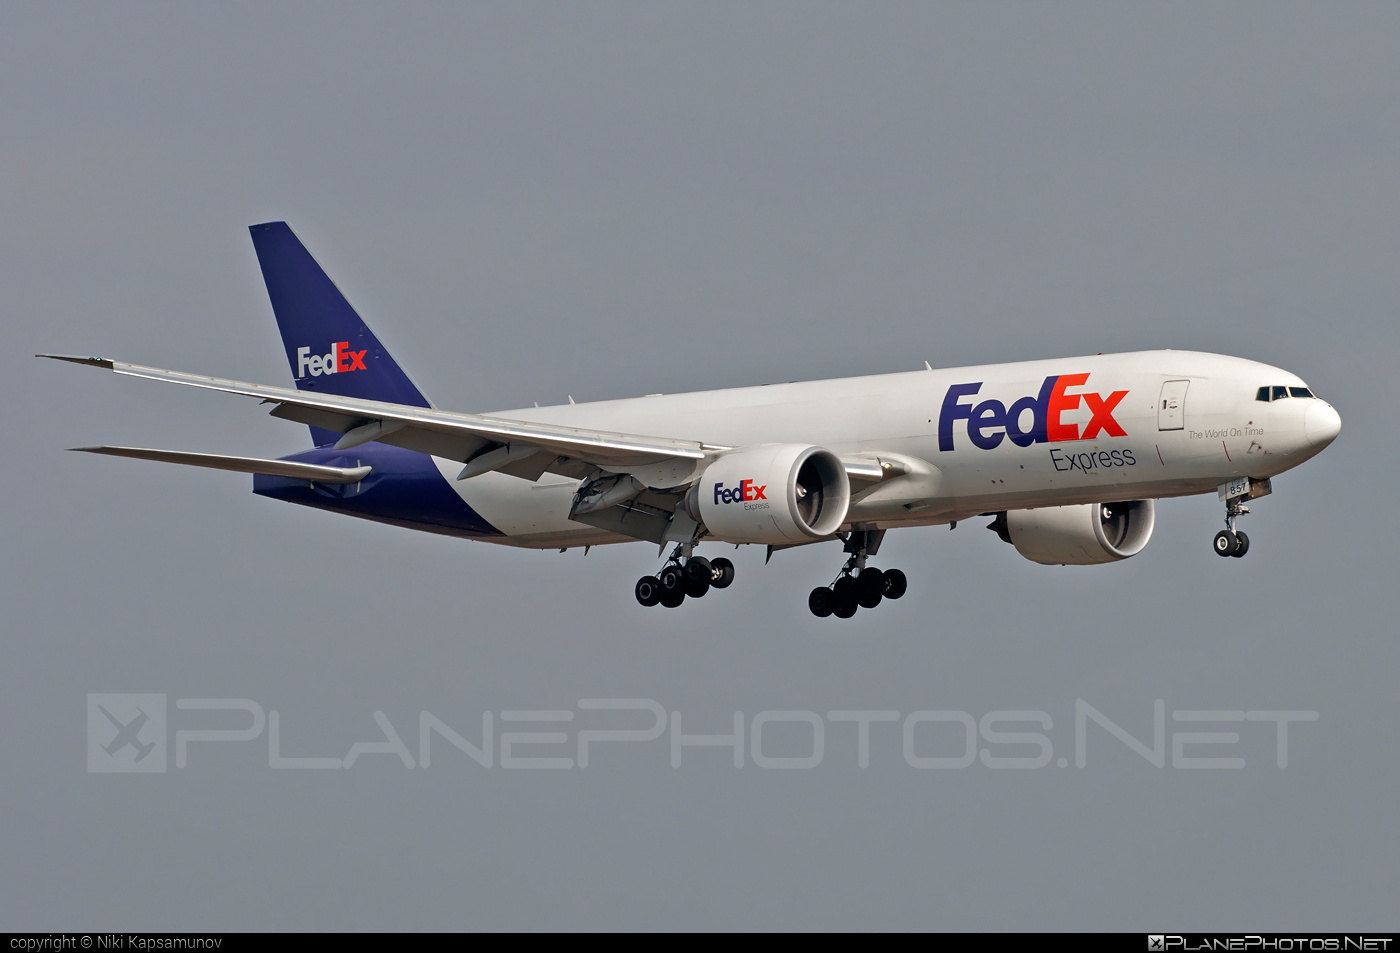 Boeing 777F - N857FD operated by FedEx Express #b777 #b777f #b777freighter #boeing #boeing777 #fedex #fedexairlines #fedexexpress #tripleseven